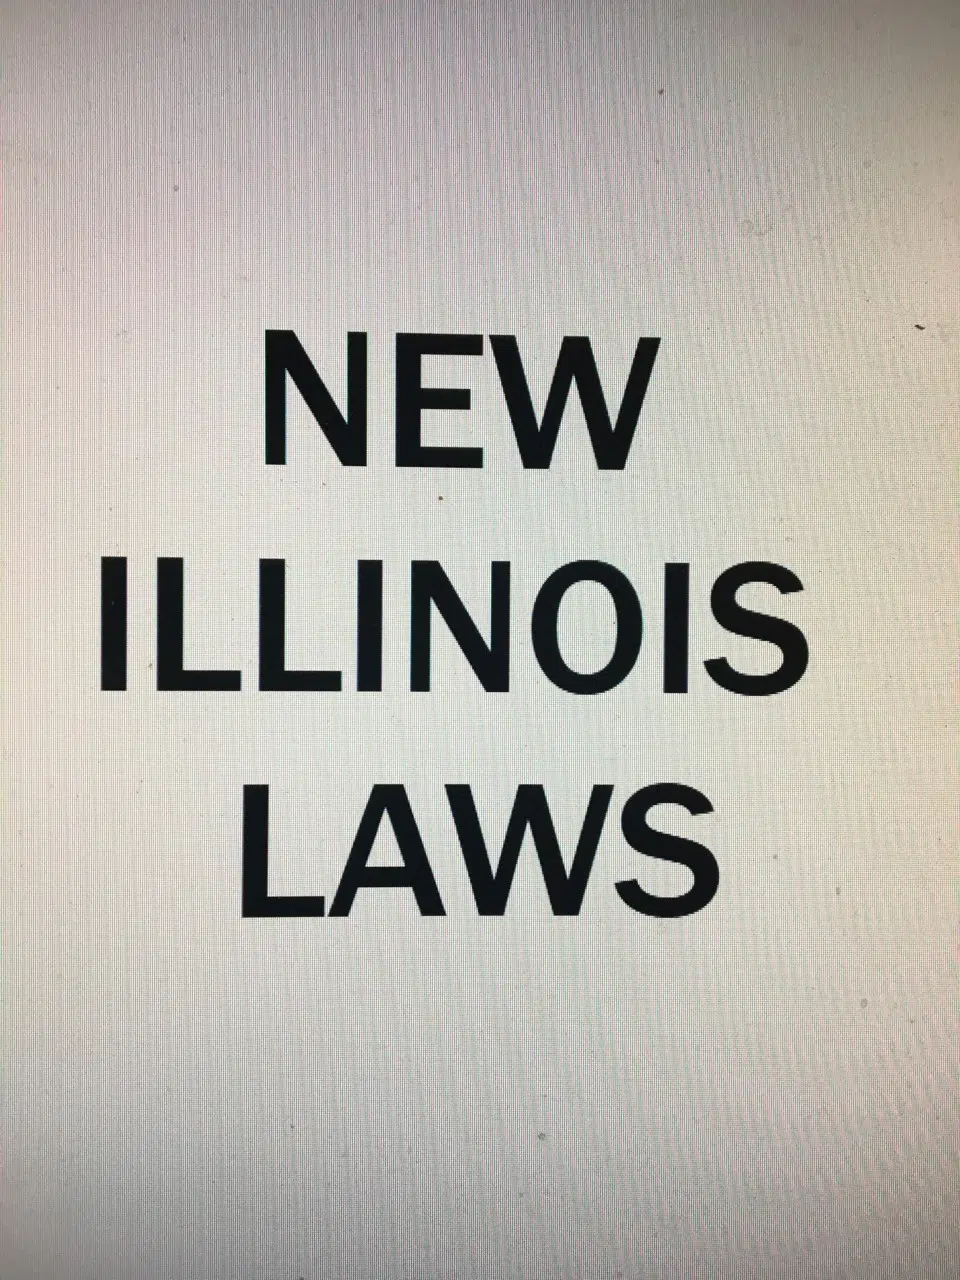 New Illinois Laws For 2020 Wikk 103 5 Fm The Eagle Classic Rock